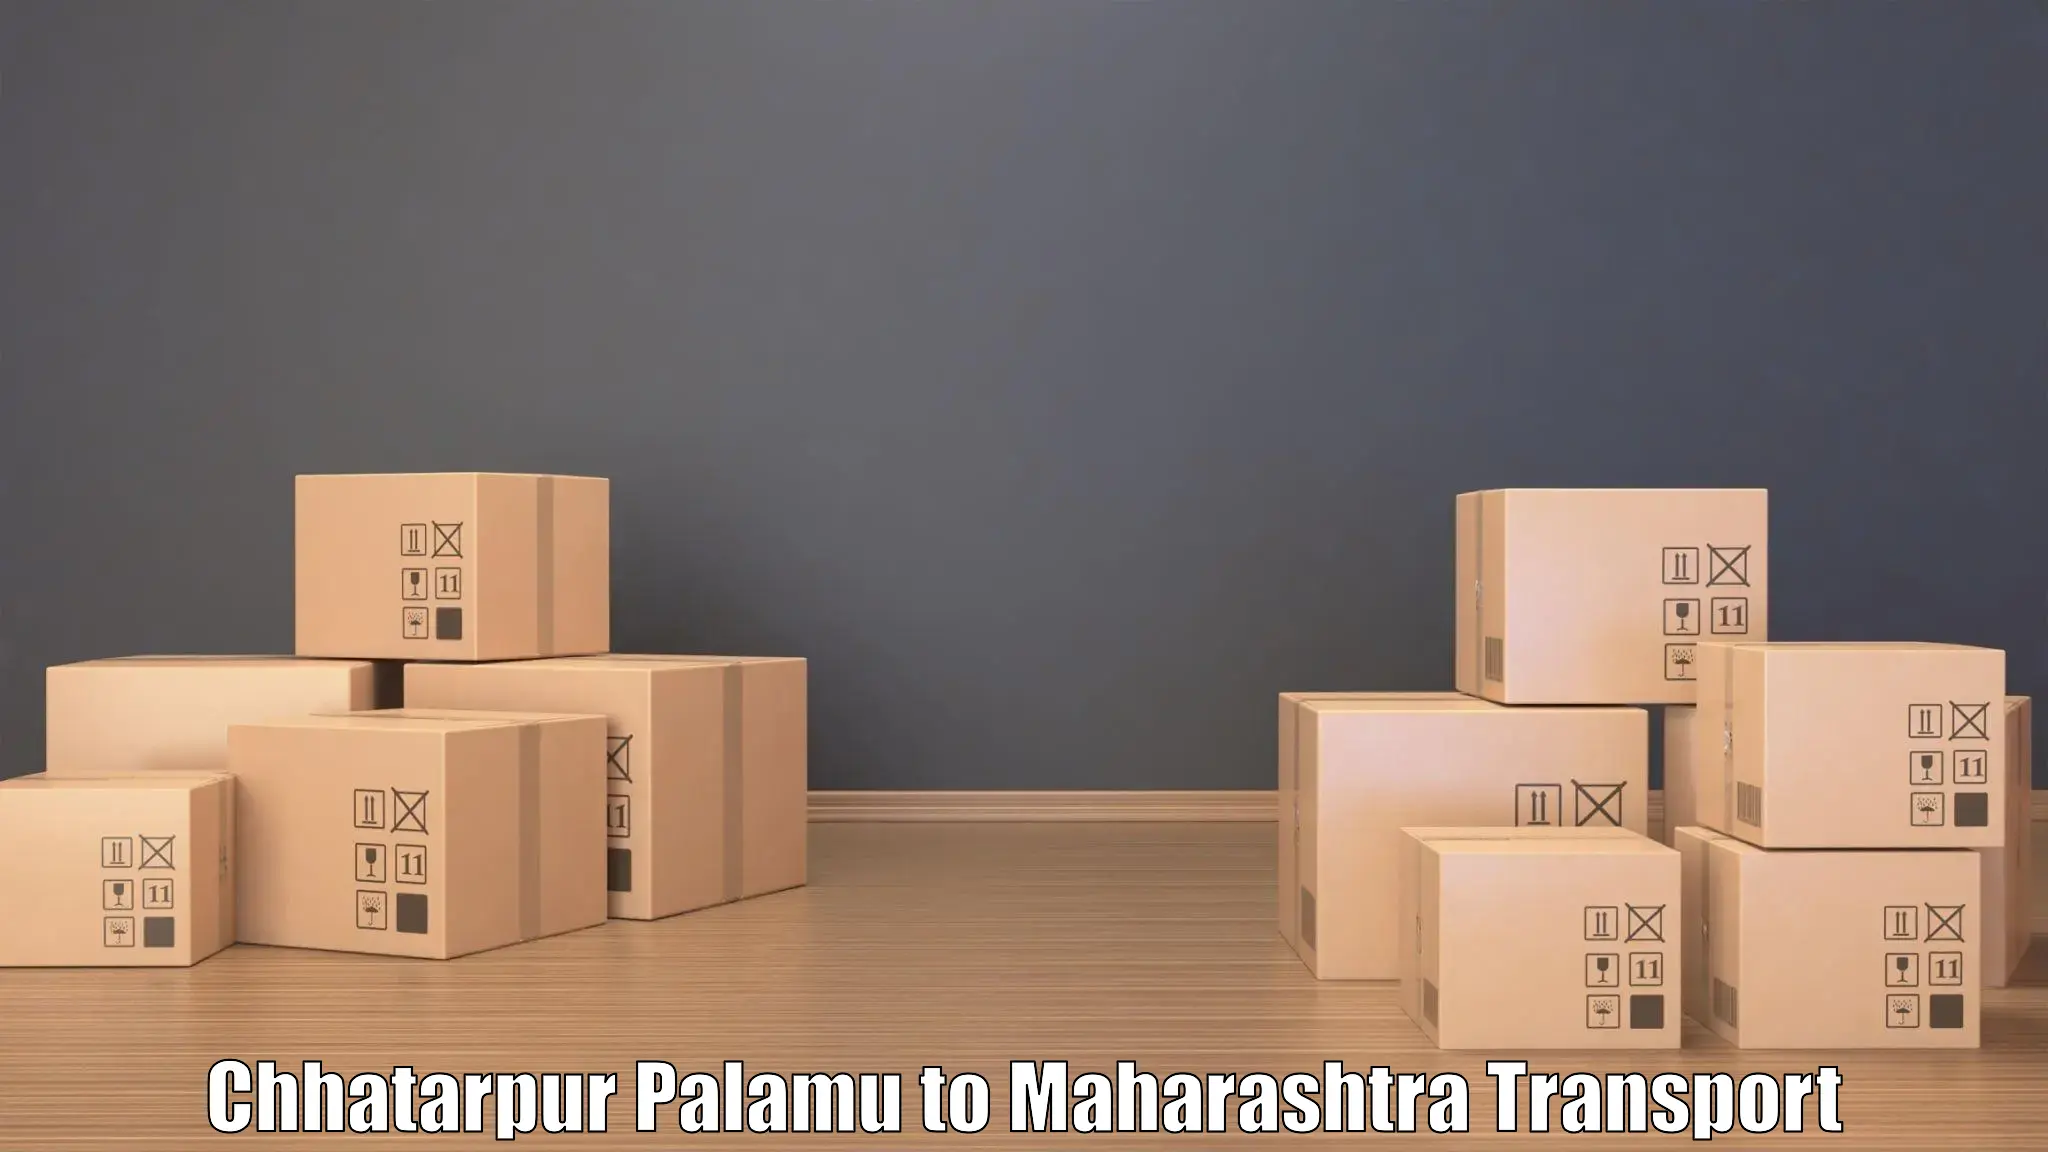 Shipping partner Chhatarpur Palamu to Osmanabad